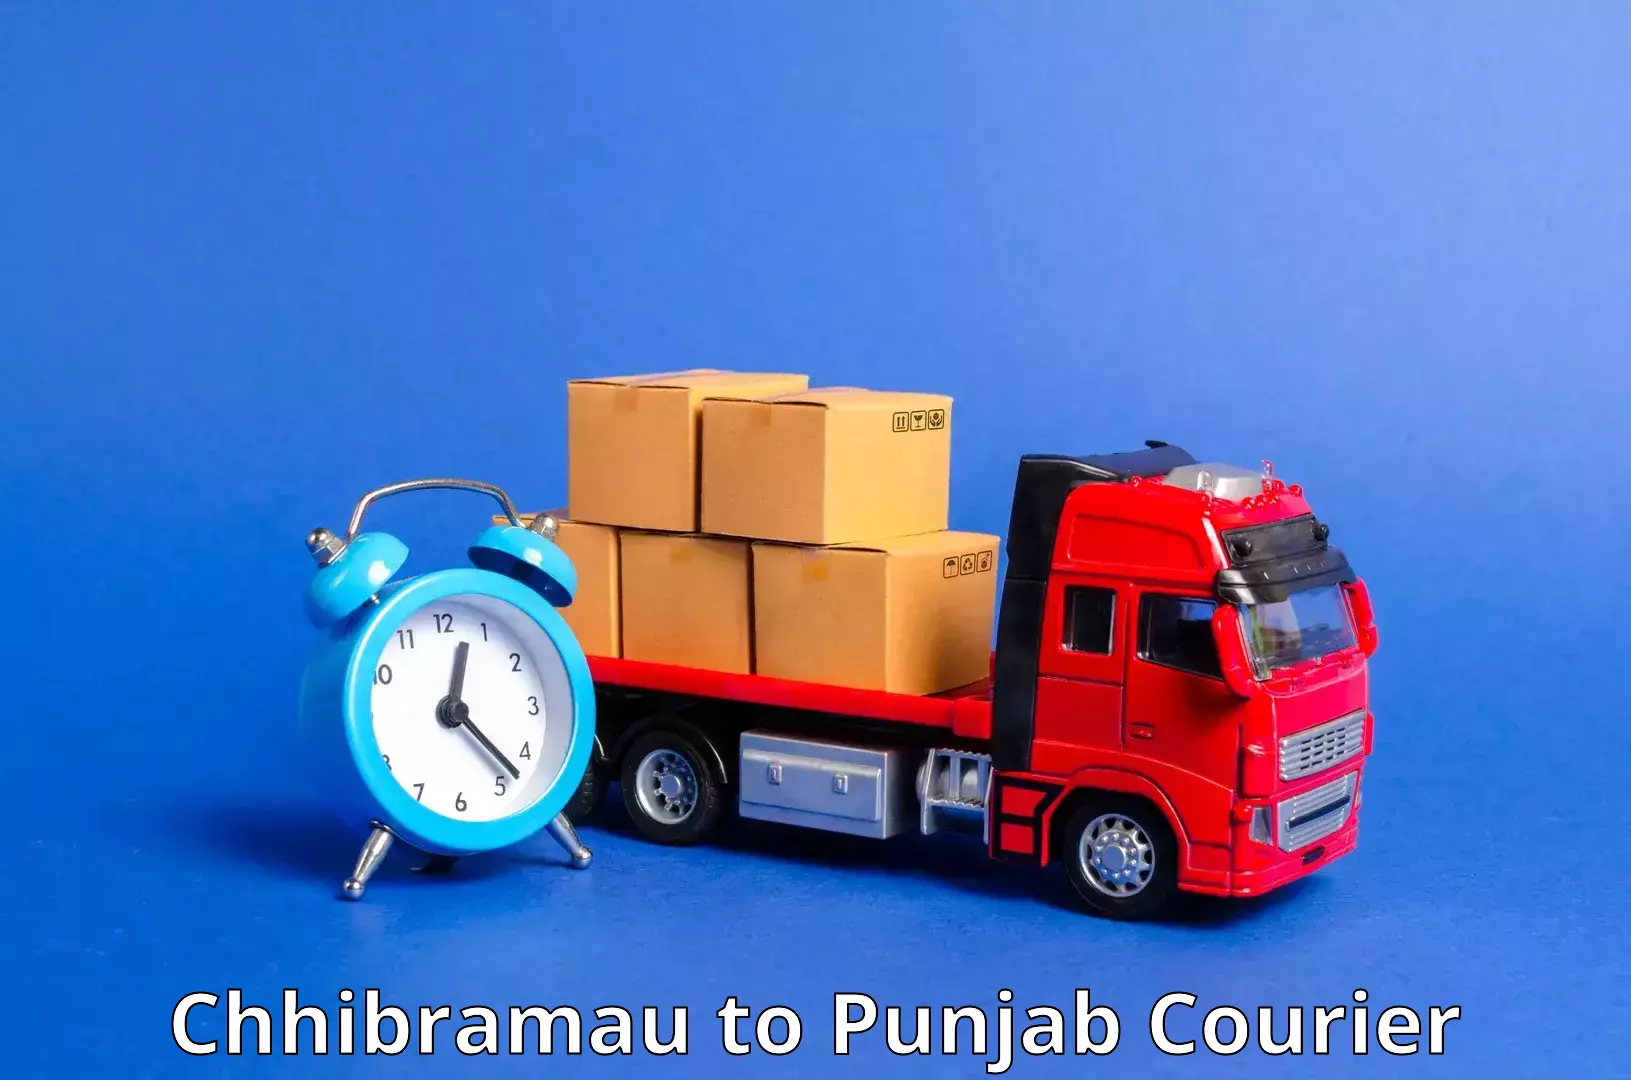 Reliable delivery network Chhibramau to Punjab